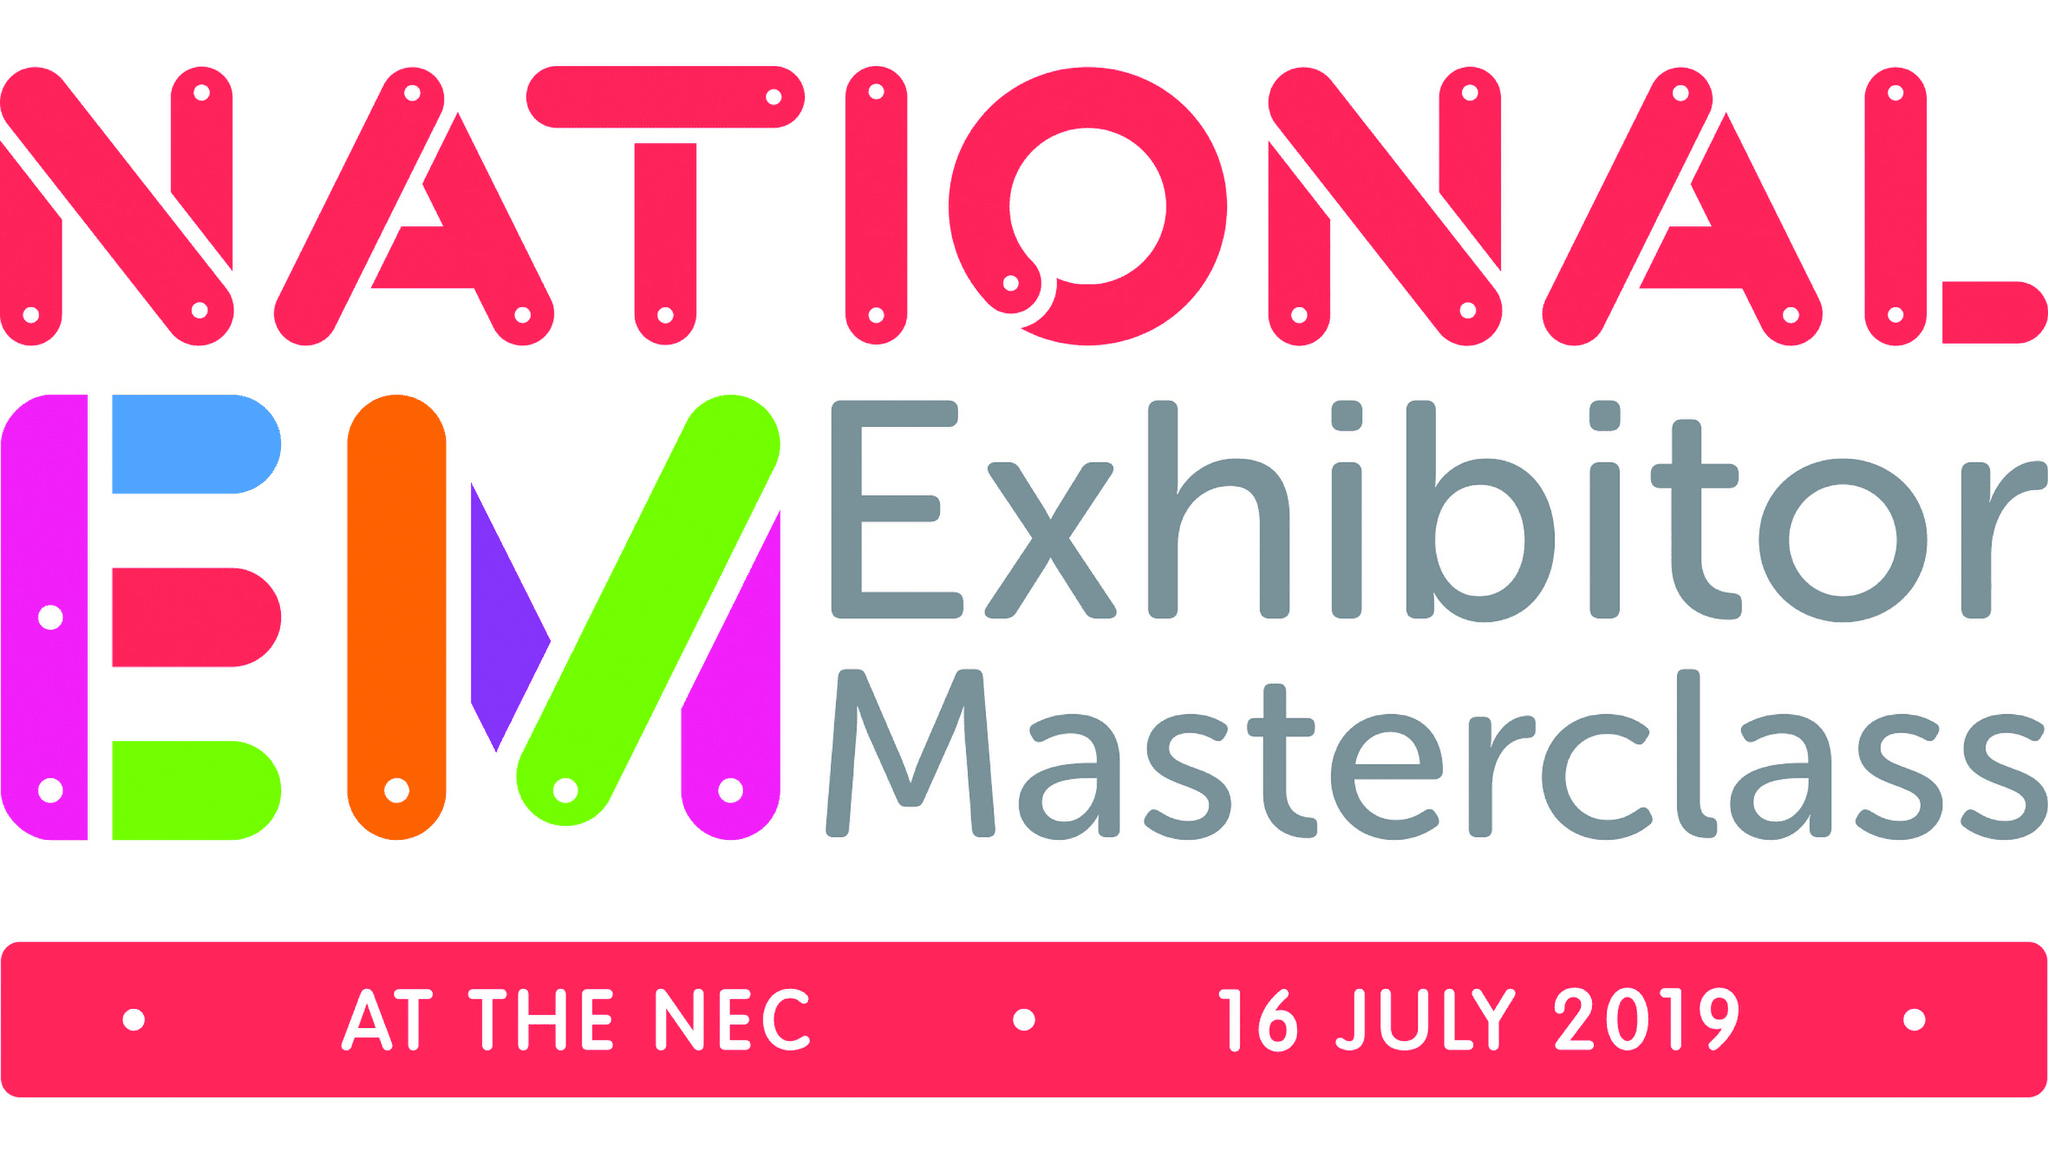 Masterclass July at the NEC